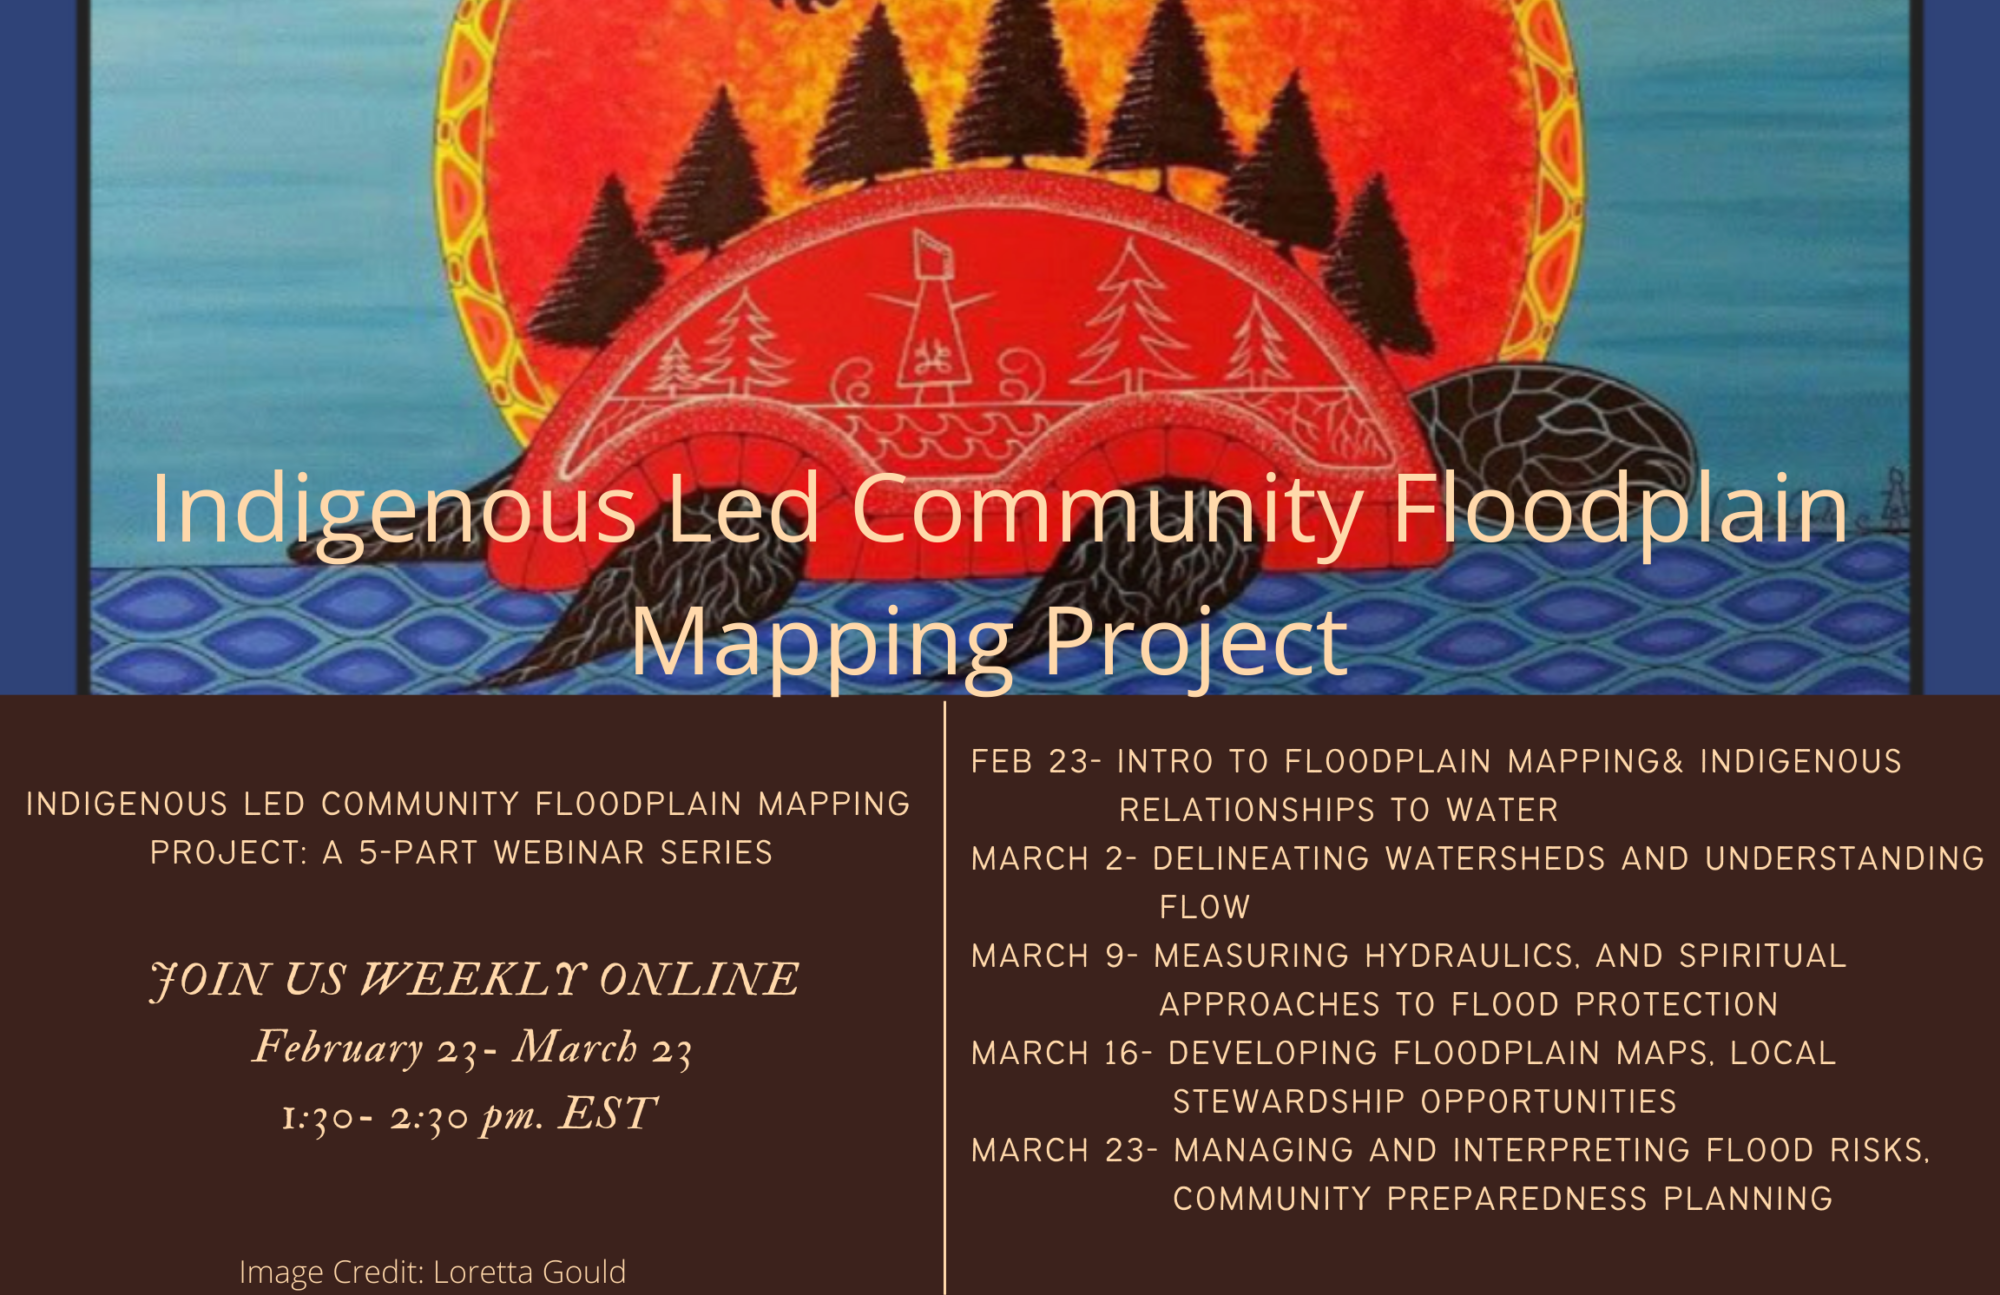 Register Now: Indigenous-Led Community Floodplain Mapping Webinar Series